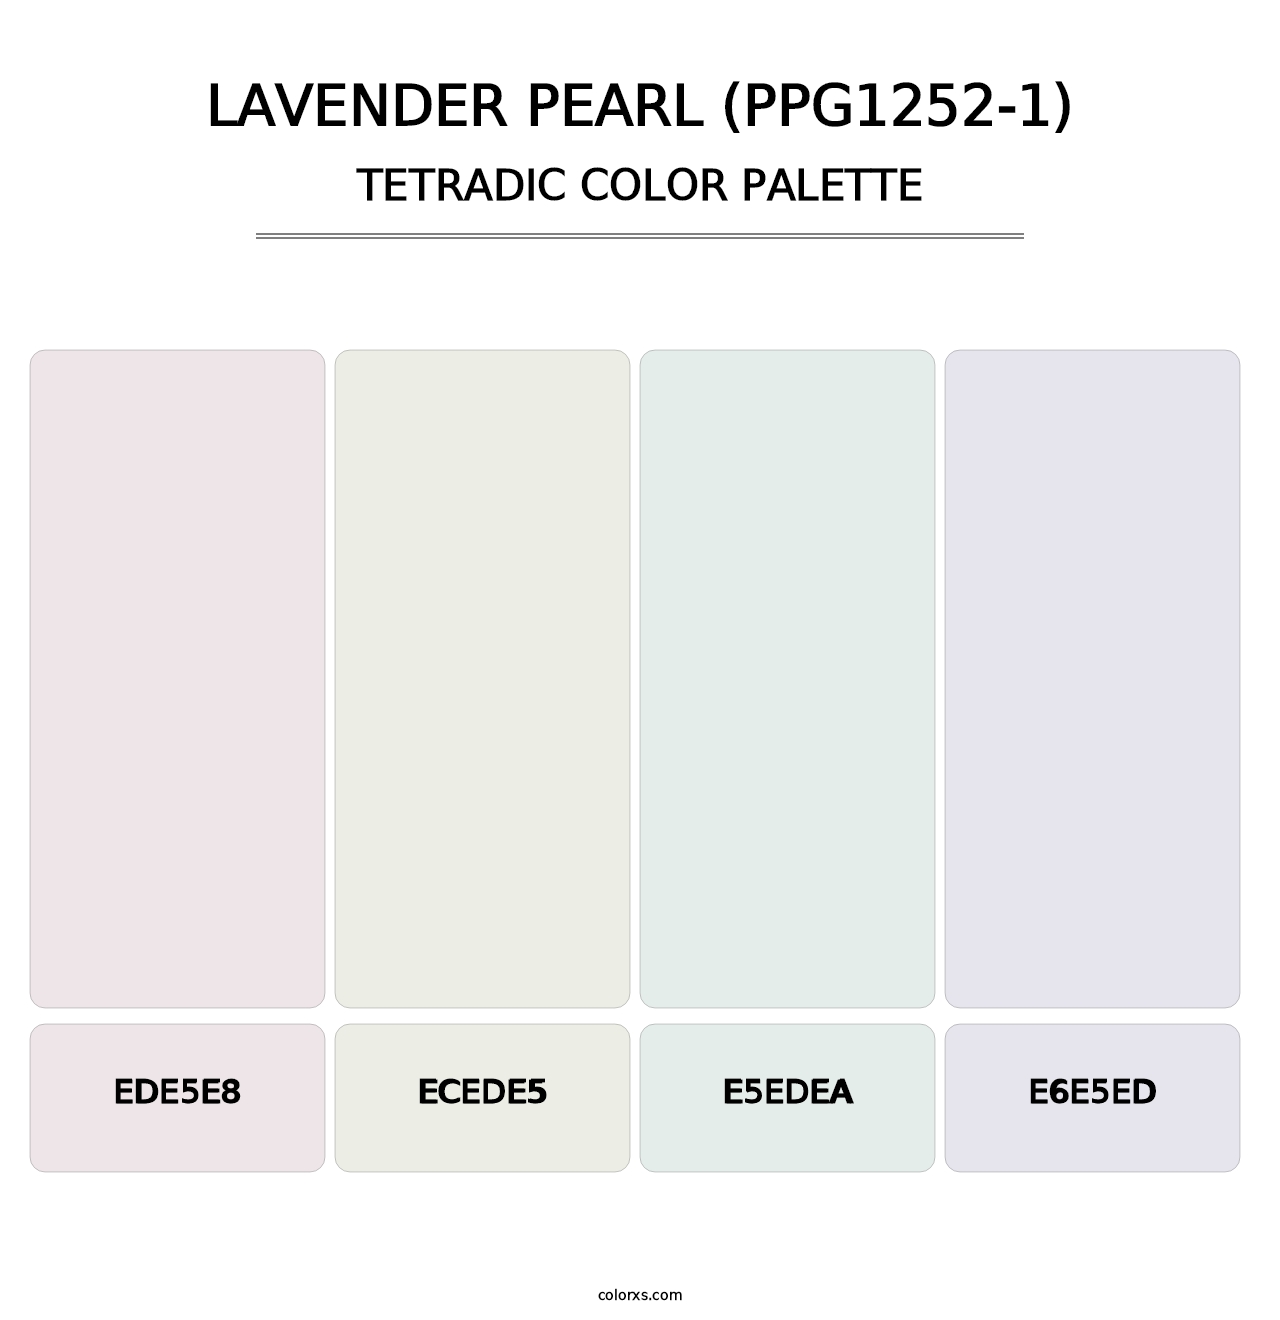 Lavender Pearl (PPG1252-1) - Tetradic Color Palette